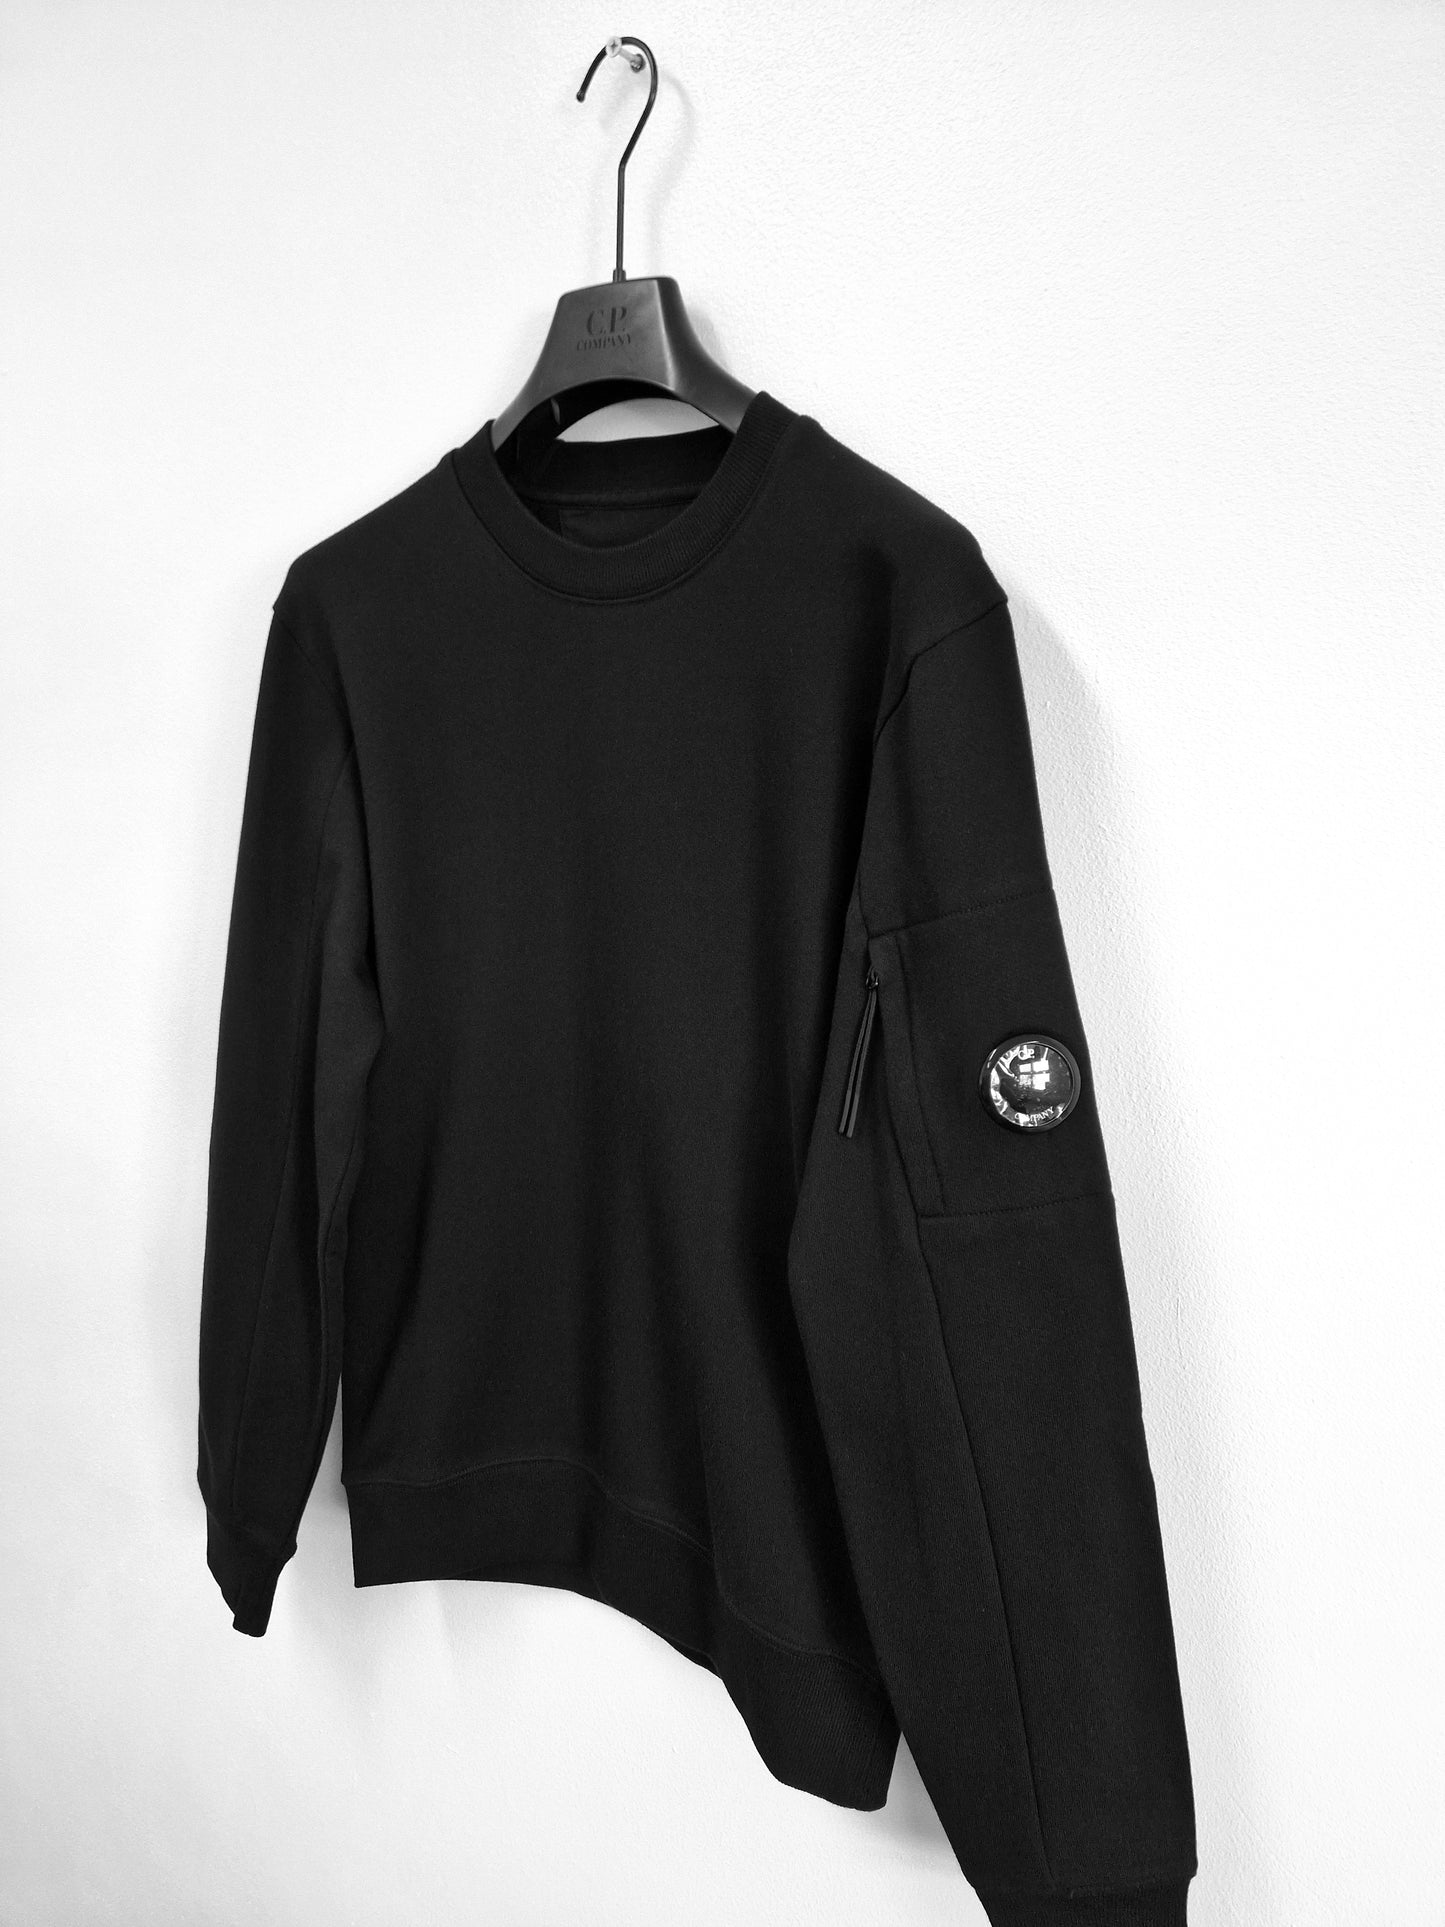 C.P. Company Diagonal Raised Fleece Sweatshirt - Black